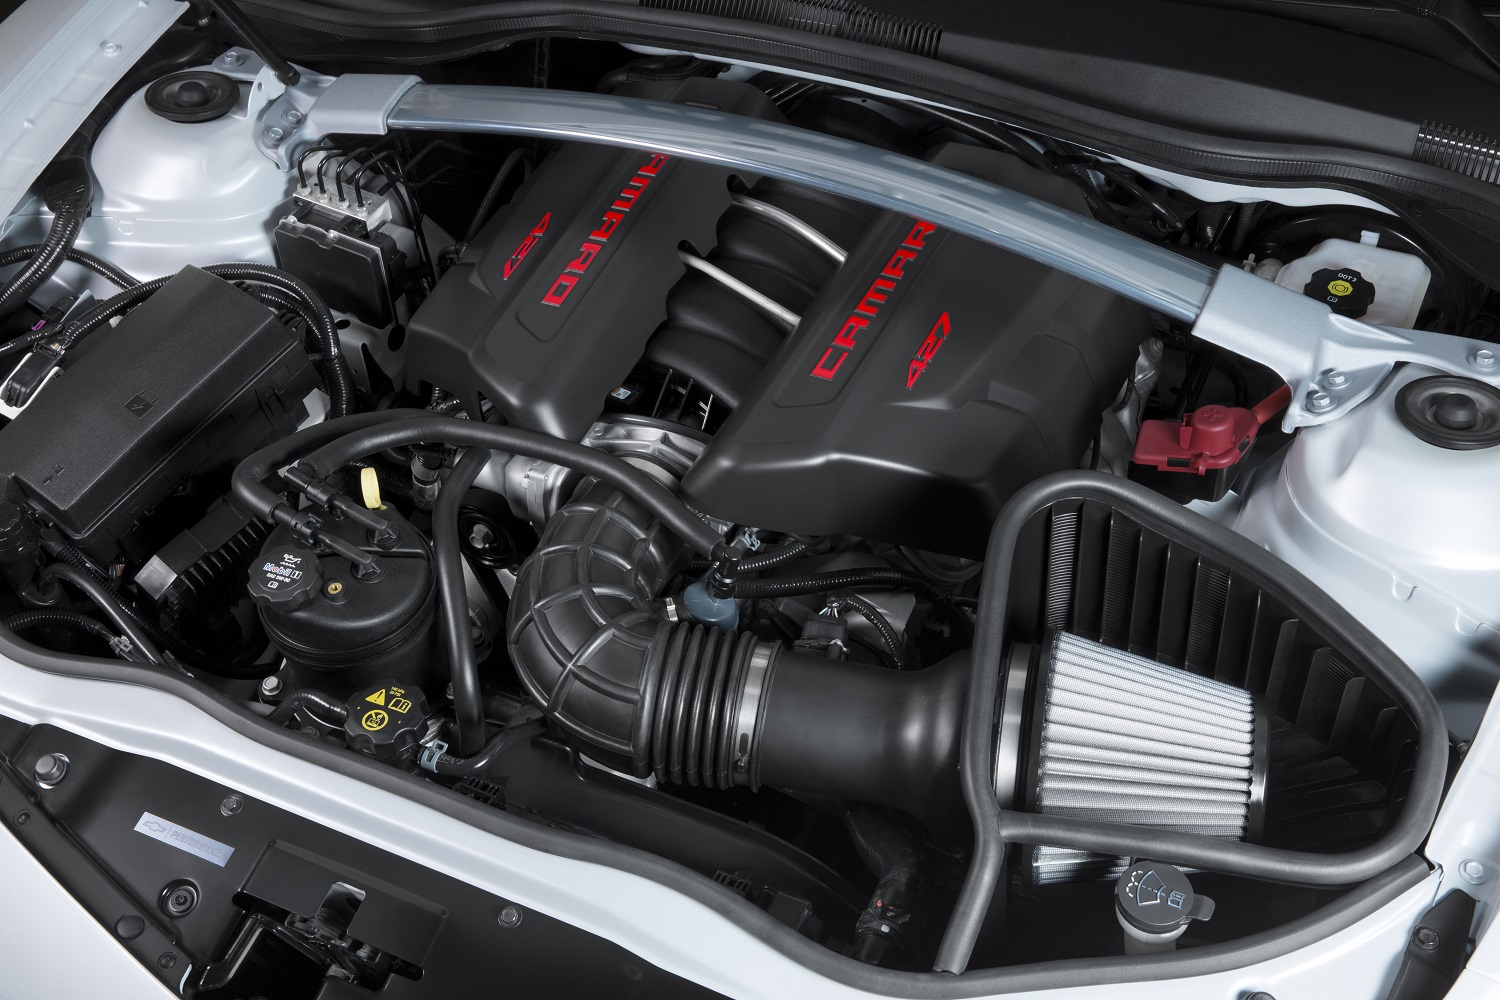 2014 Chevrolet Camaro Z28 engine